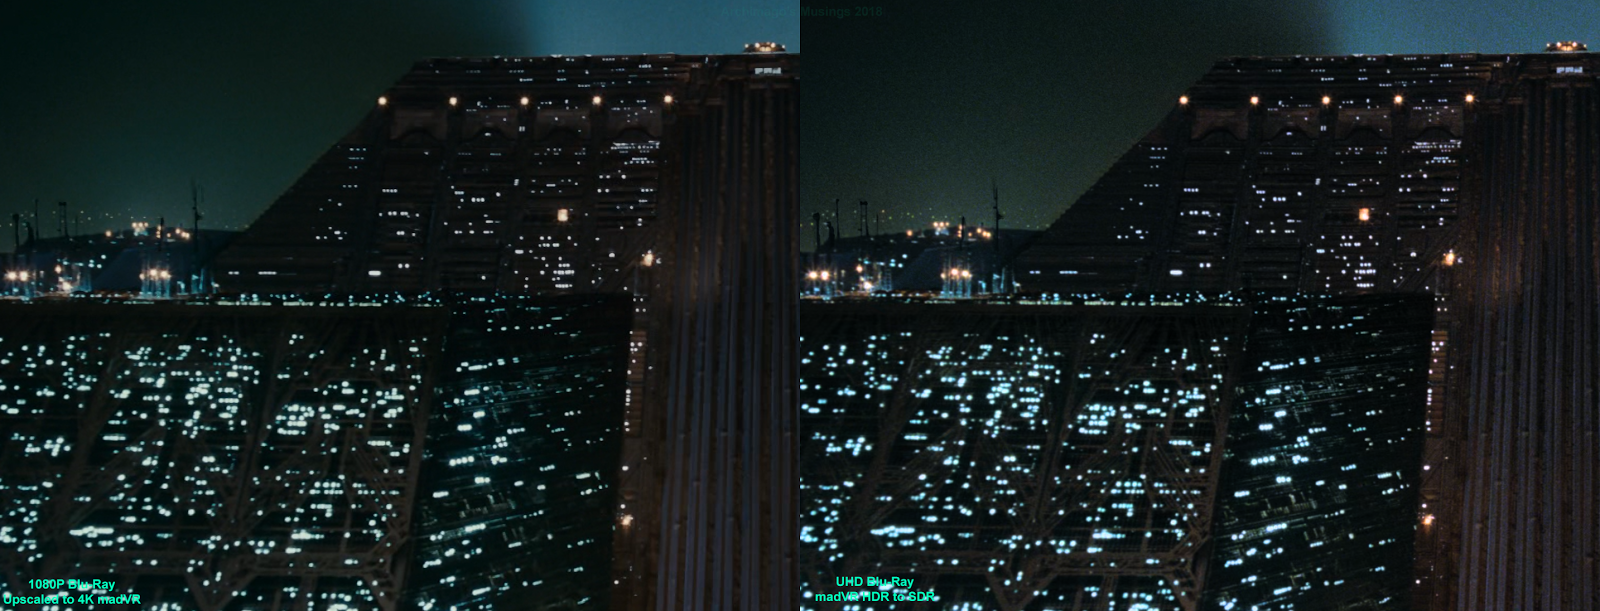 Blade Runner Blu-ray Comparison  Director's Cut vs Final Cut 